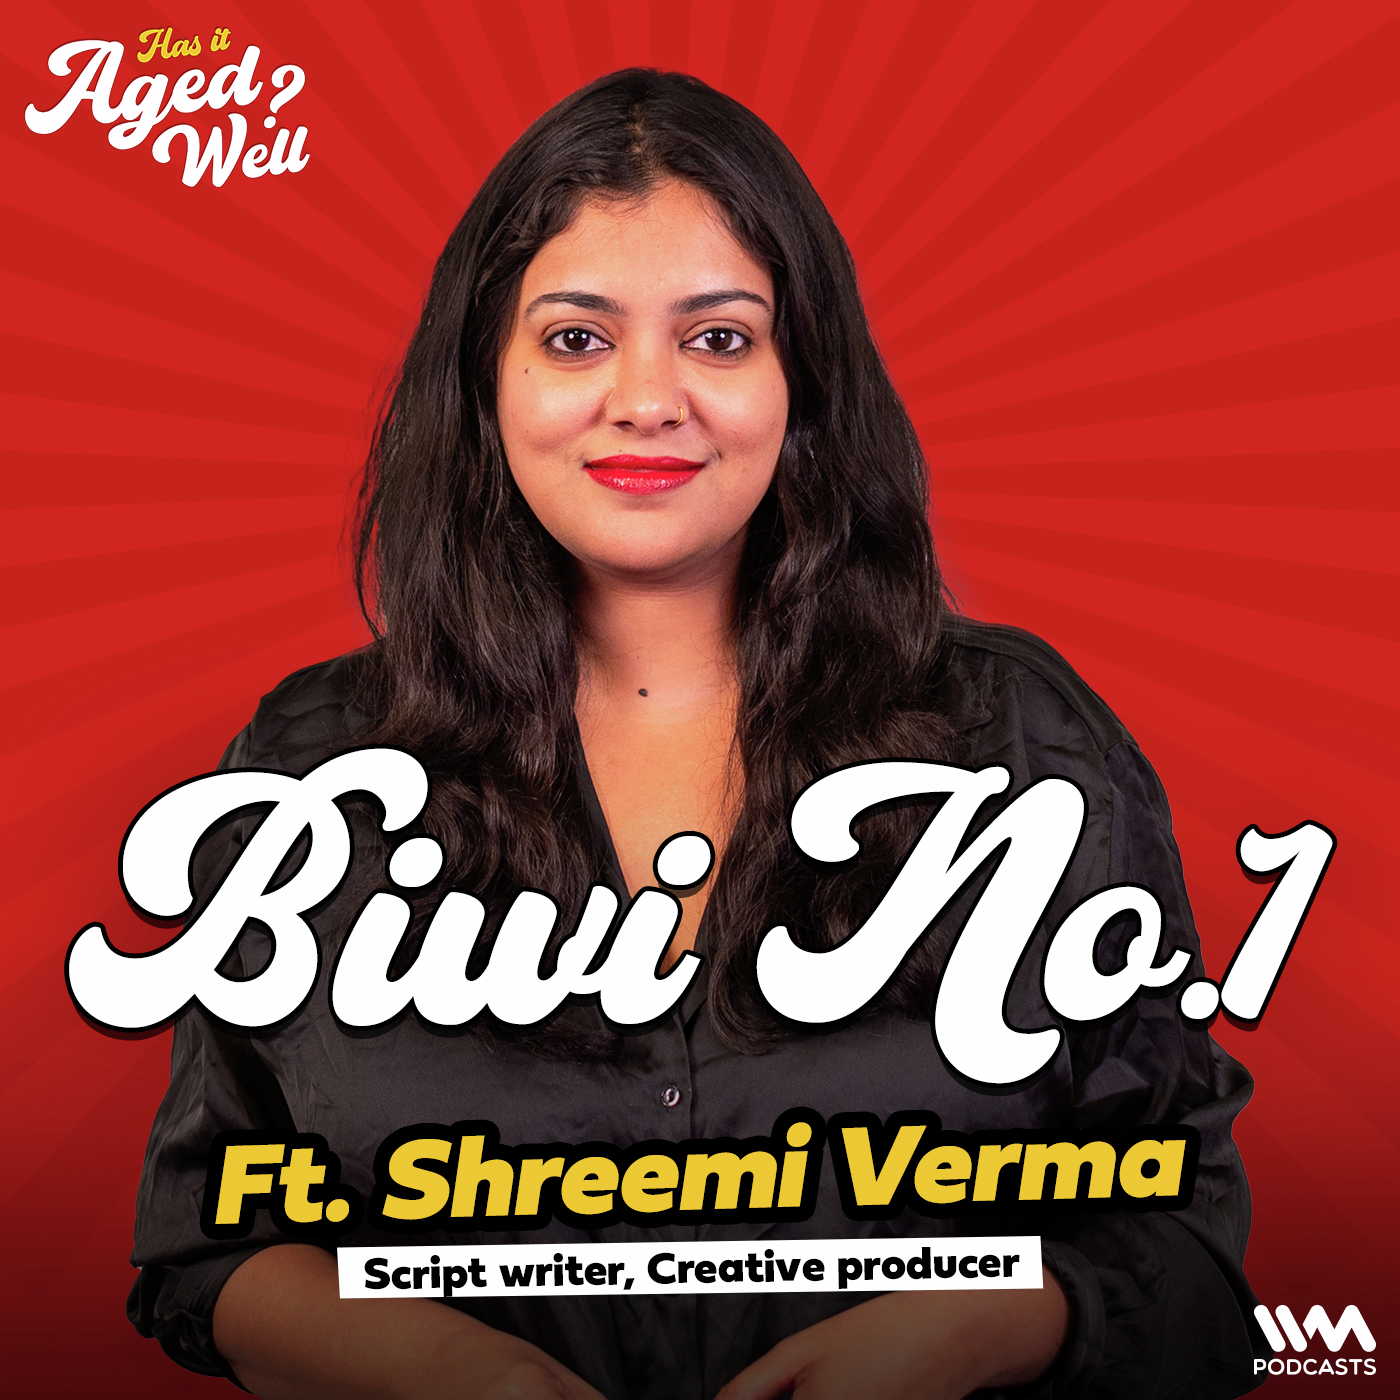 Biwi no. 1 ft. Shreemi Verma